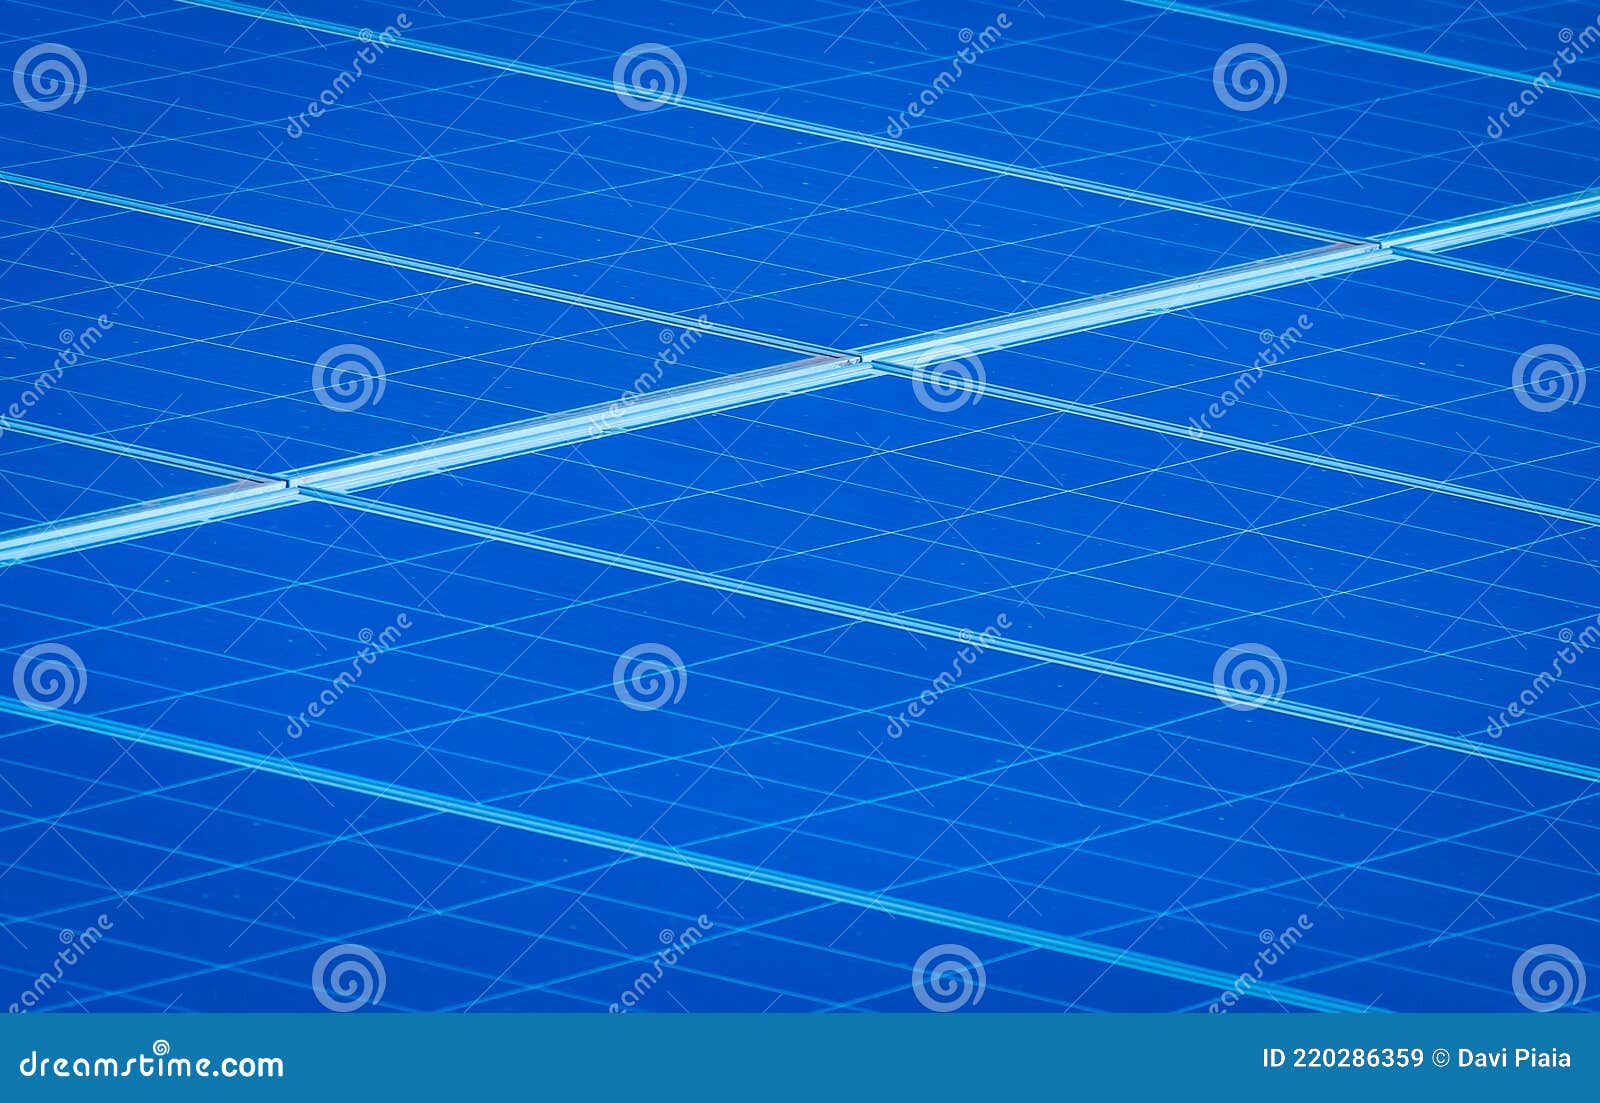 solar panel board, photovotaic energy